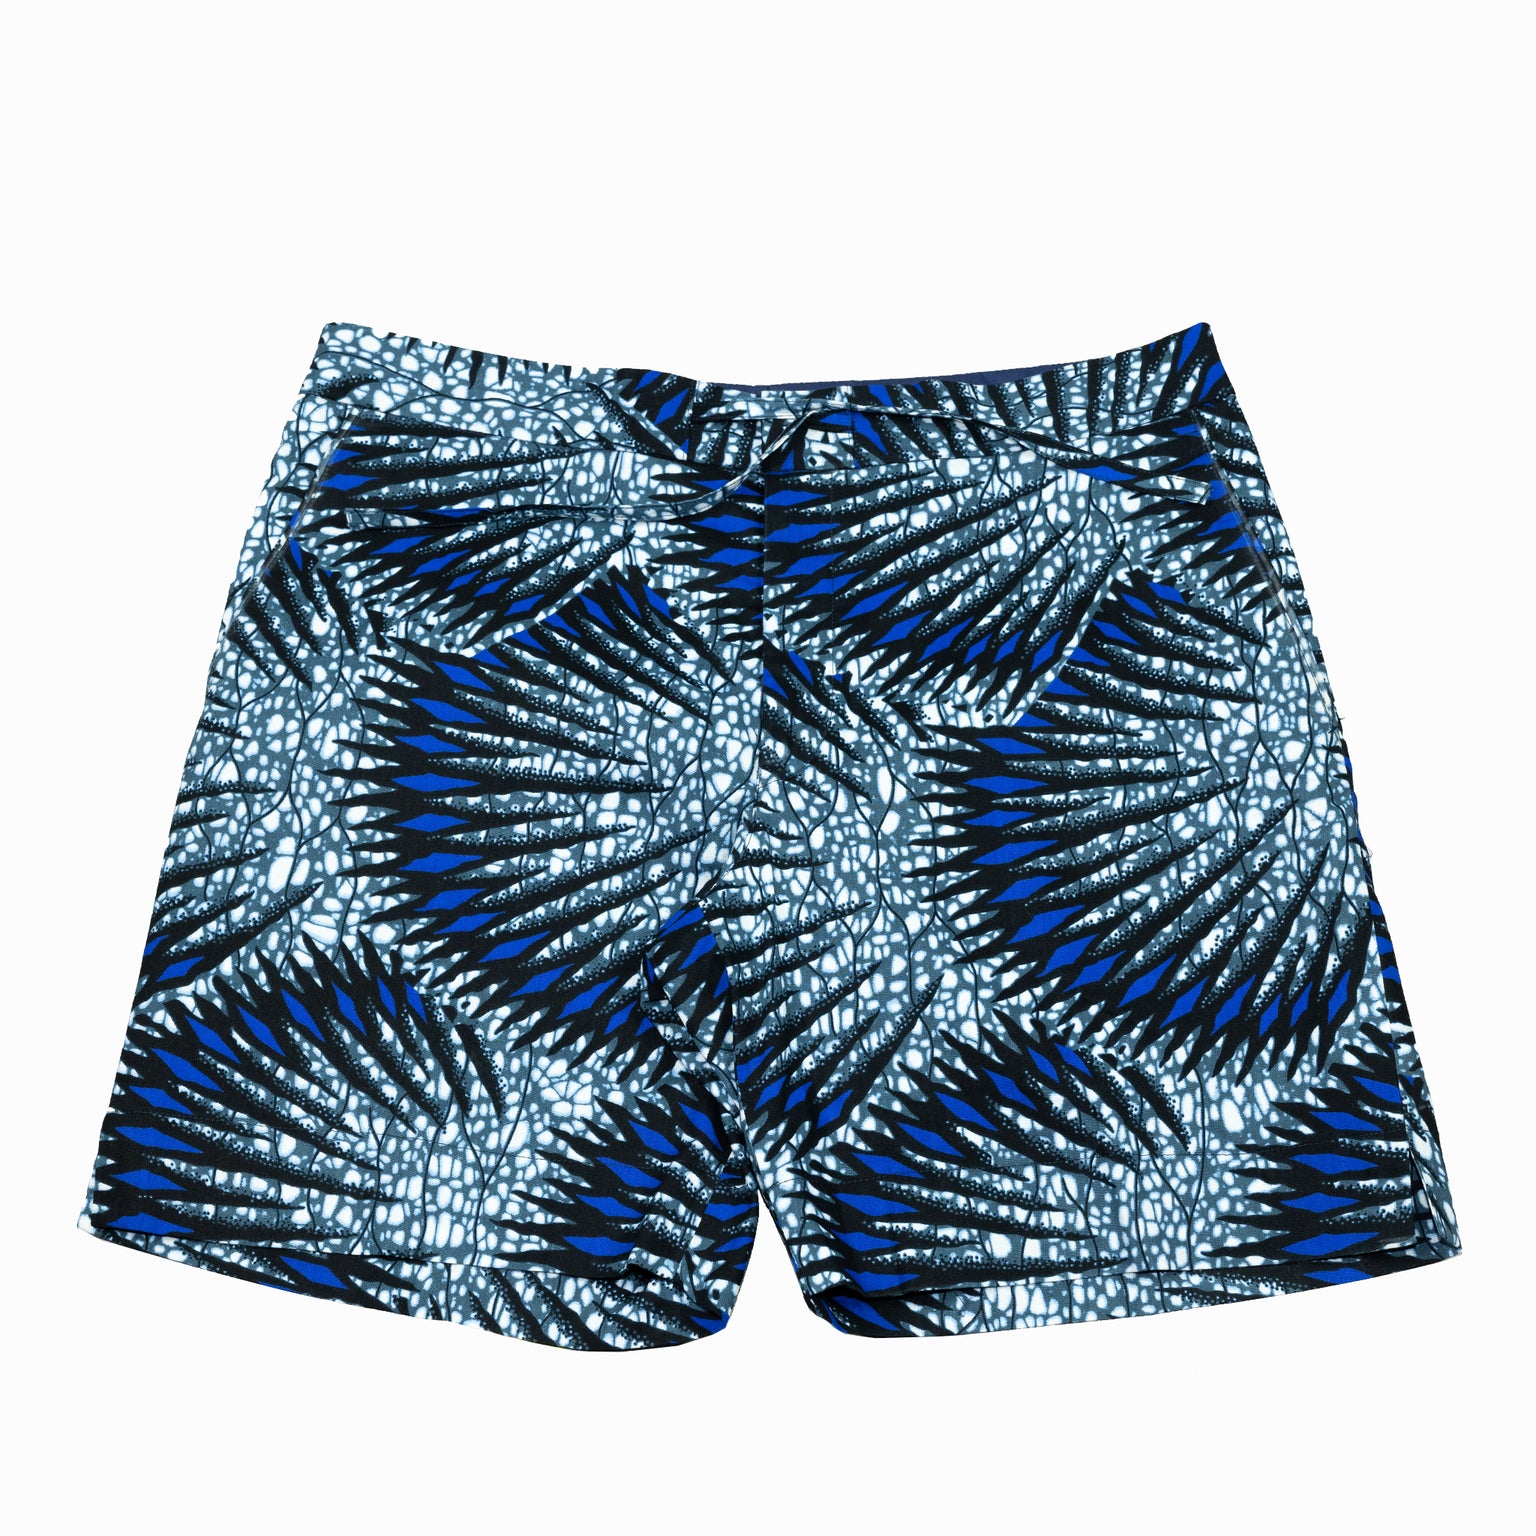 Beach Lounge Shirts | Men's Board Shorts | Beachwear shirts - The ...